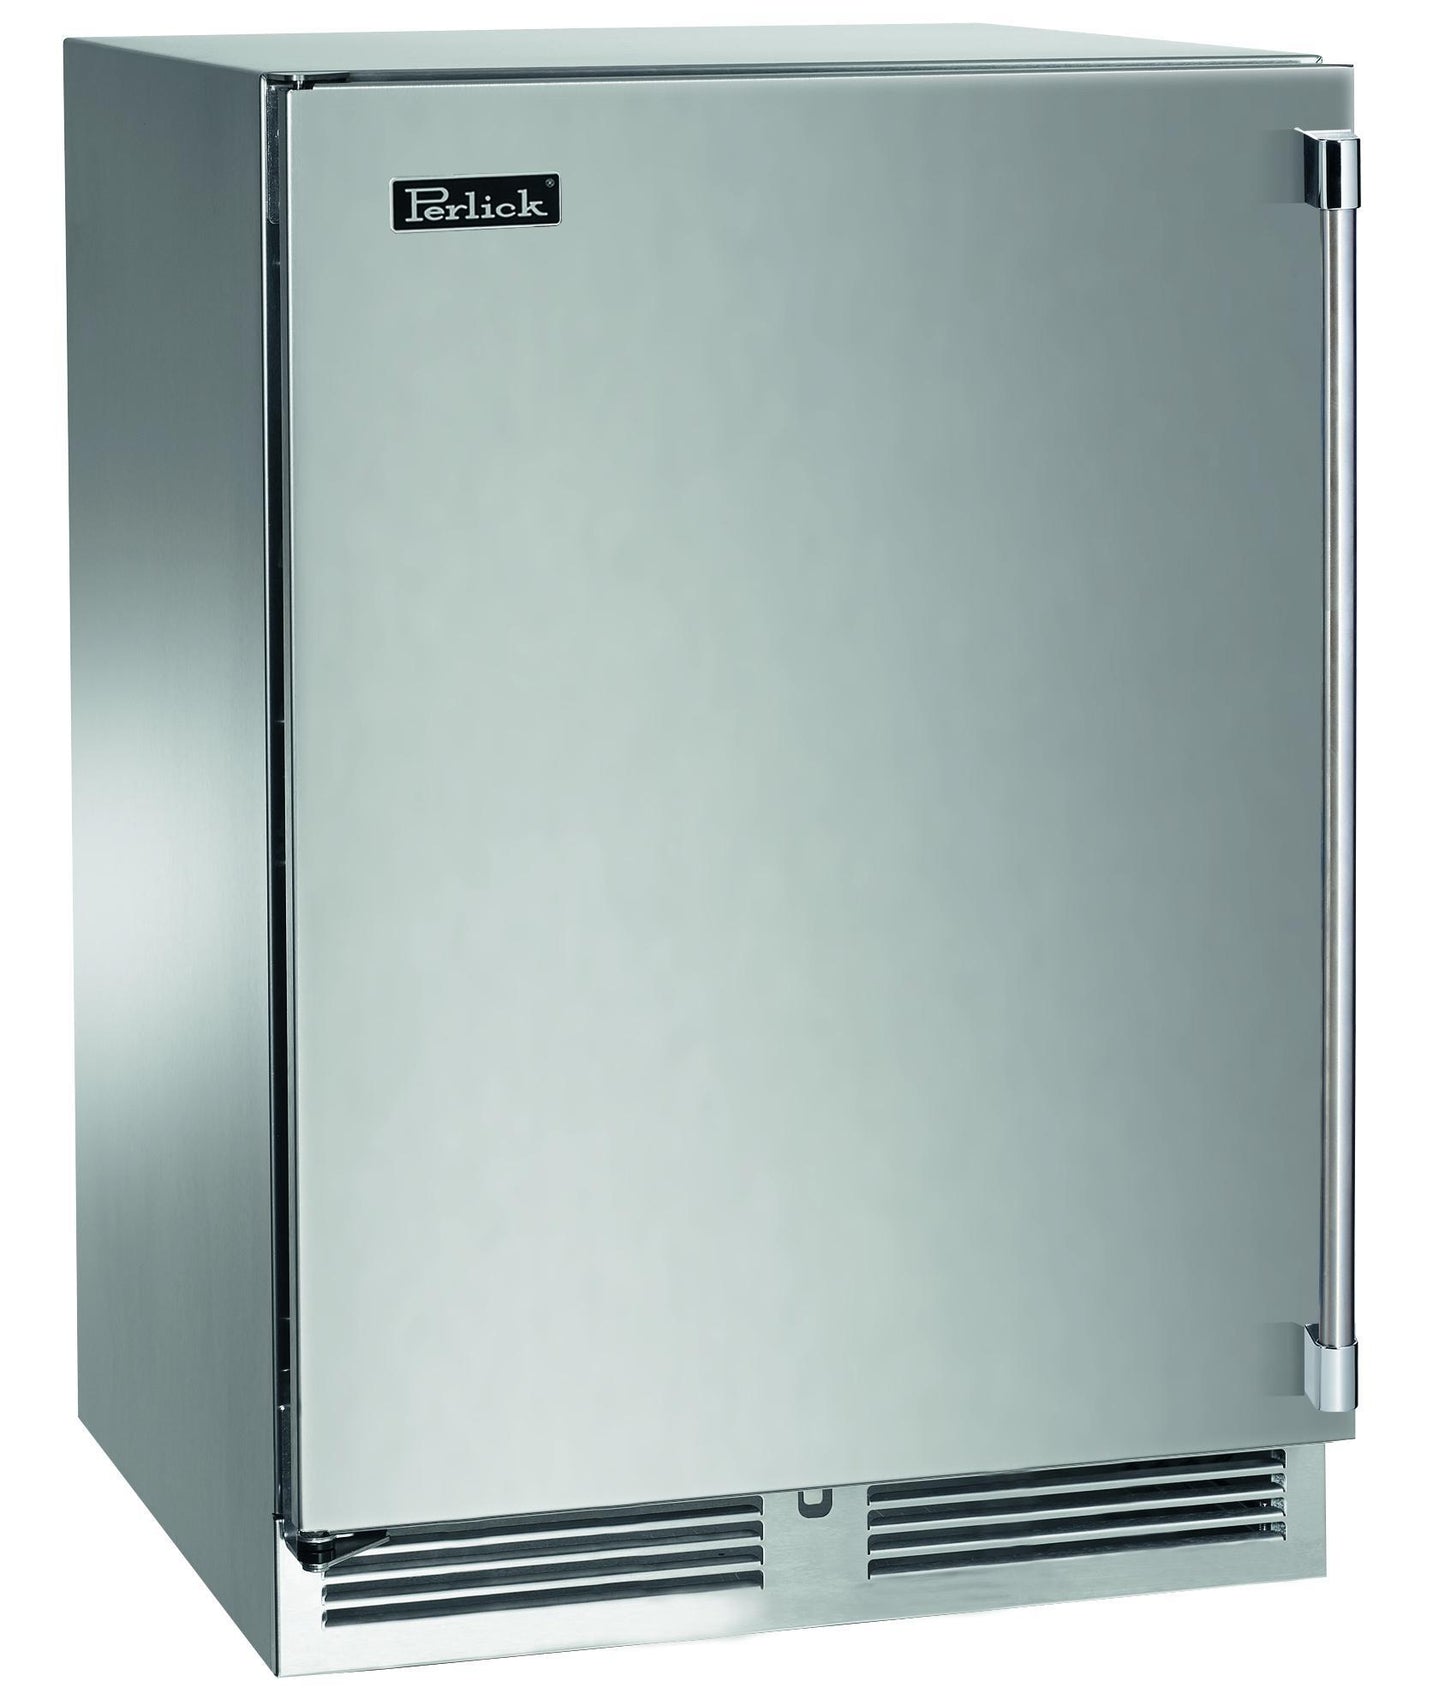 Perlick HP24RS41R 24" Undercounter Refrigerator